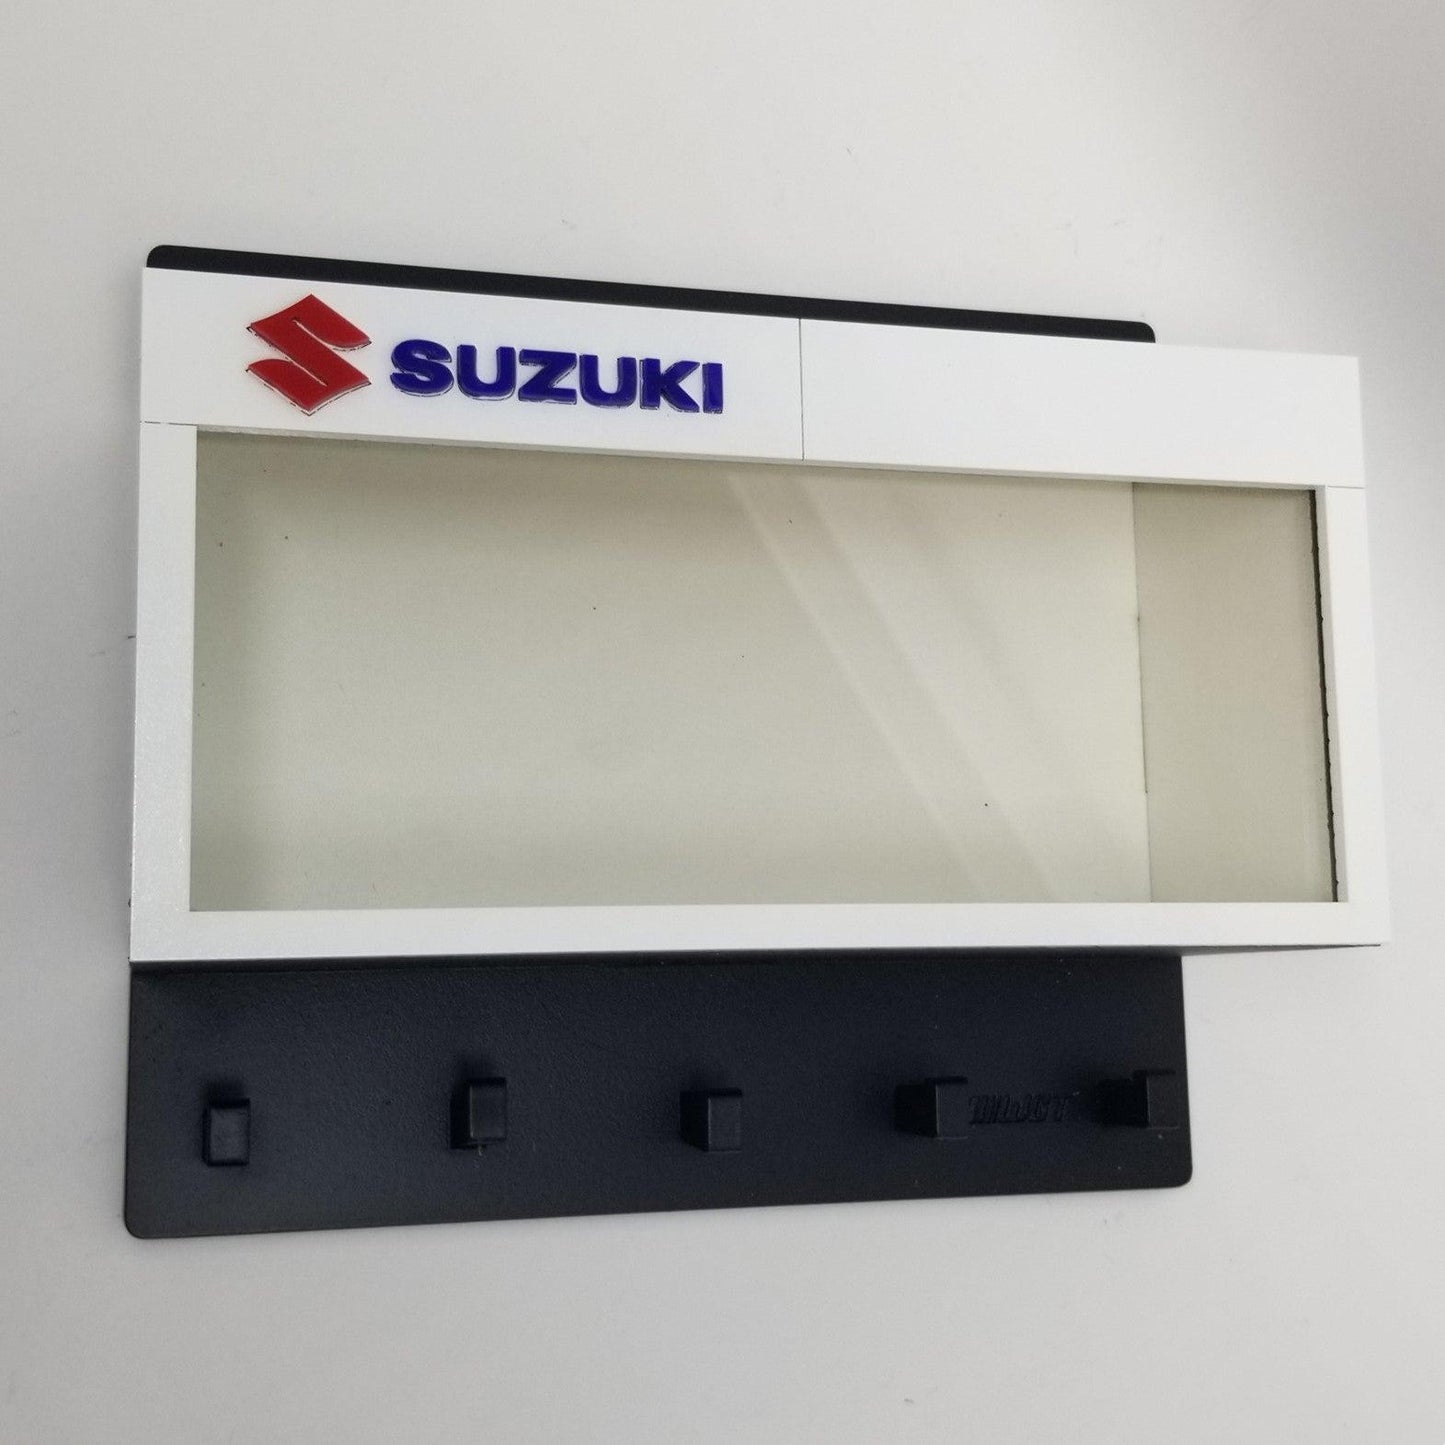 Suzuki Dealership Wall Key Hook Rack - Exclusive item - Handcrafted Key Holder - Brazilian Shop